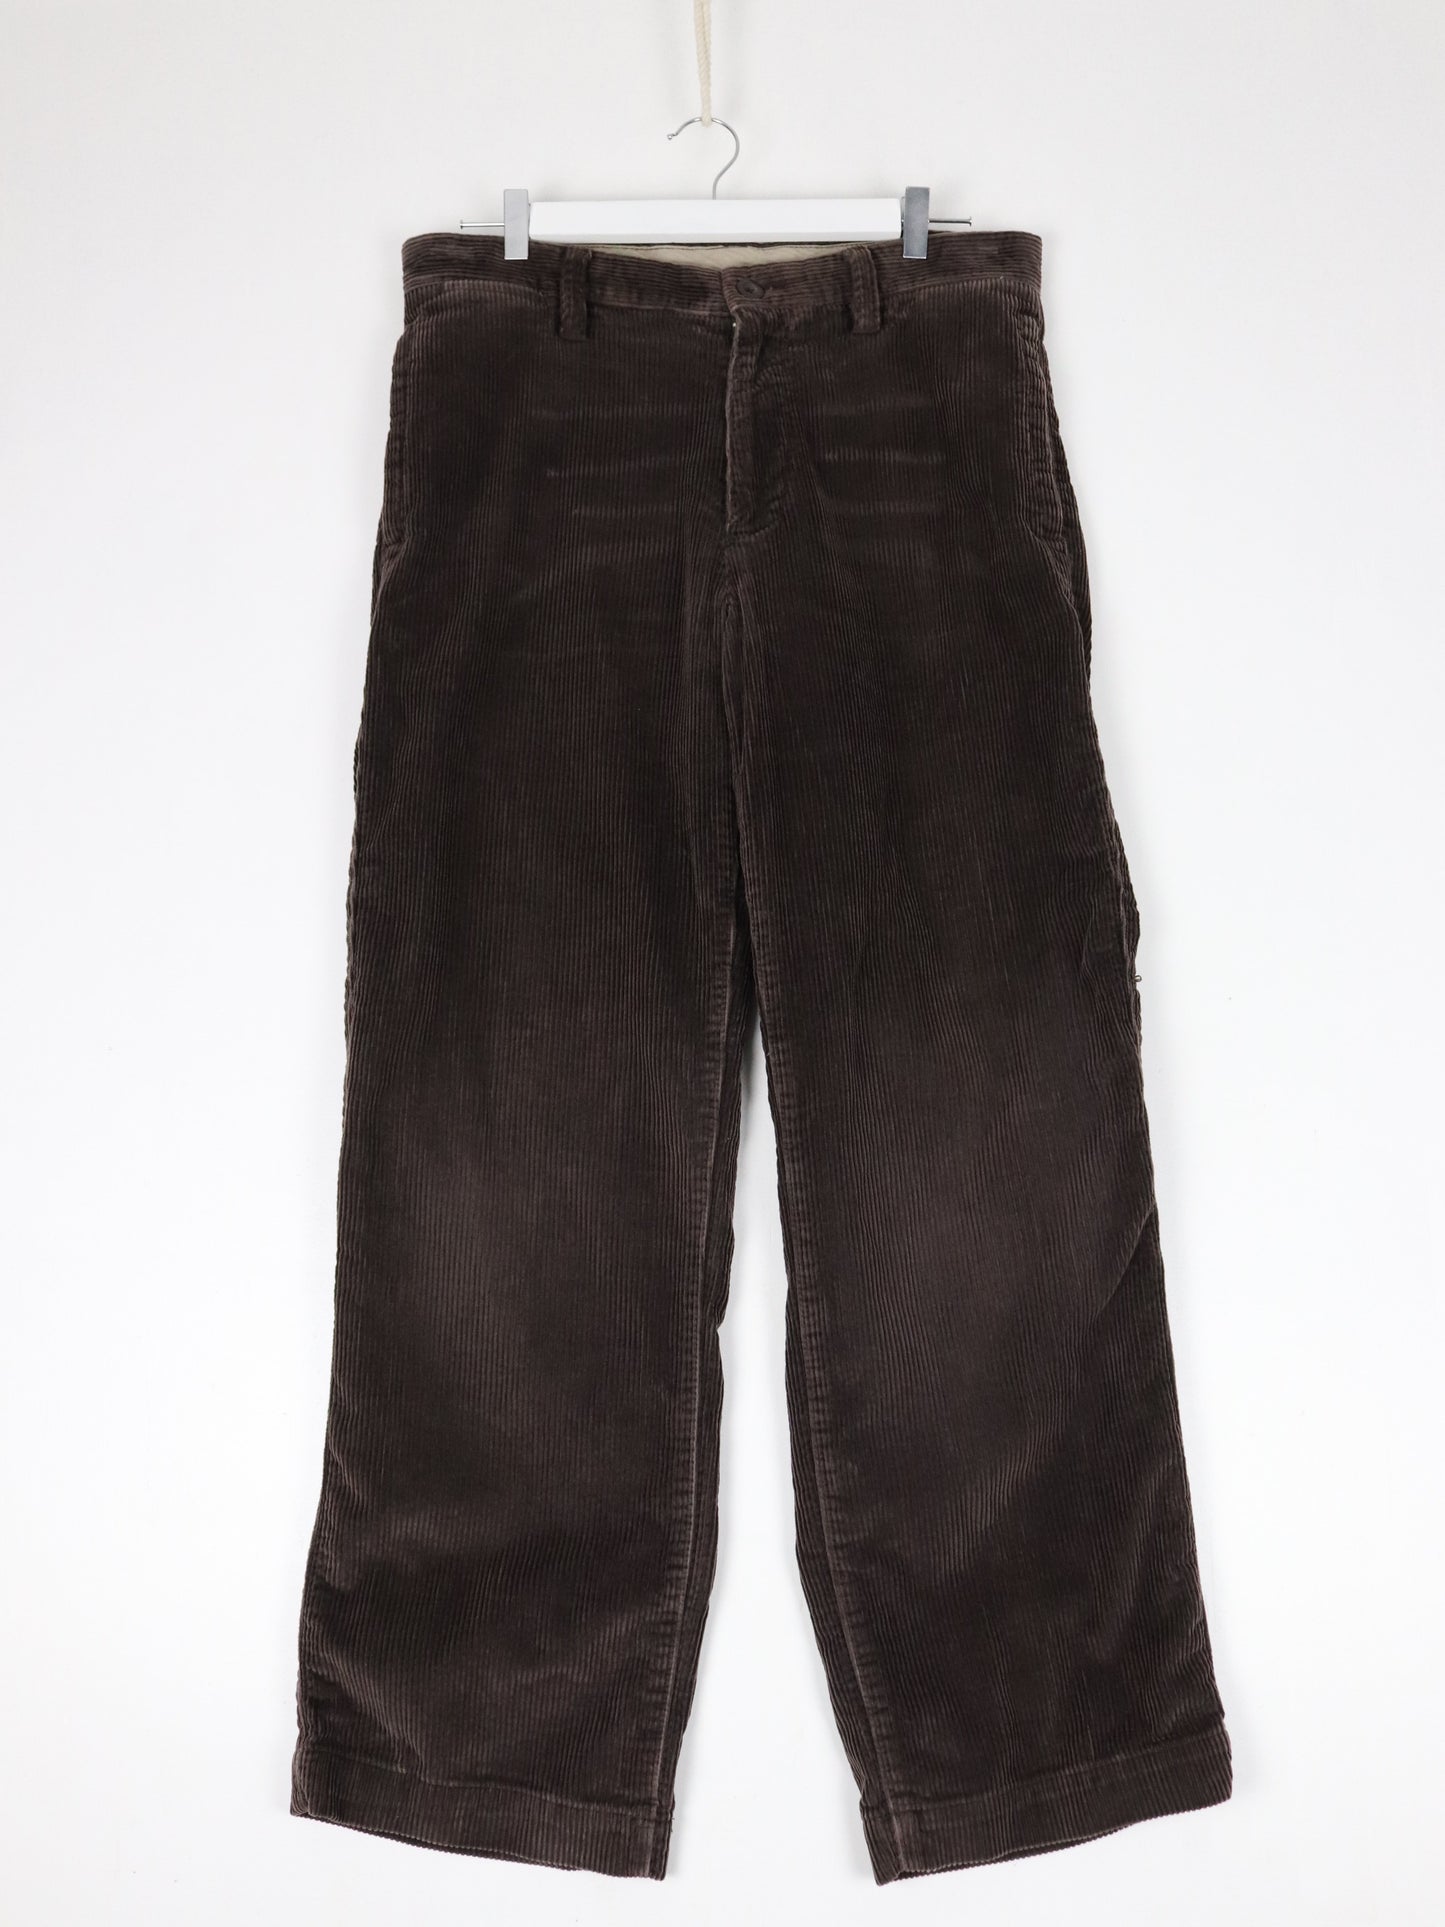 Gap Pants Mens 34 x 30 Brown Corduroy Trousers